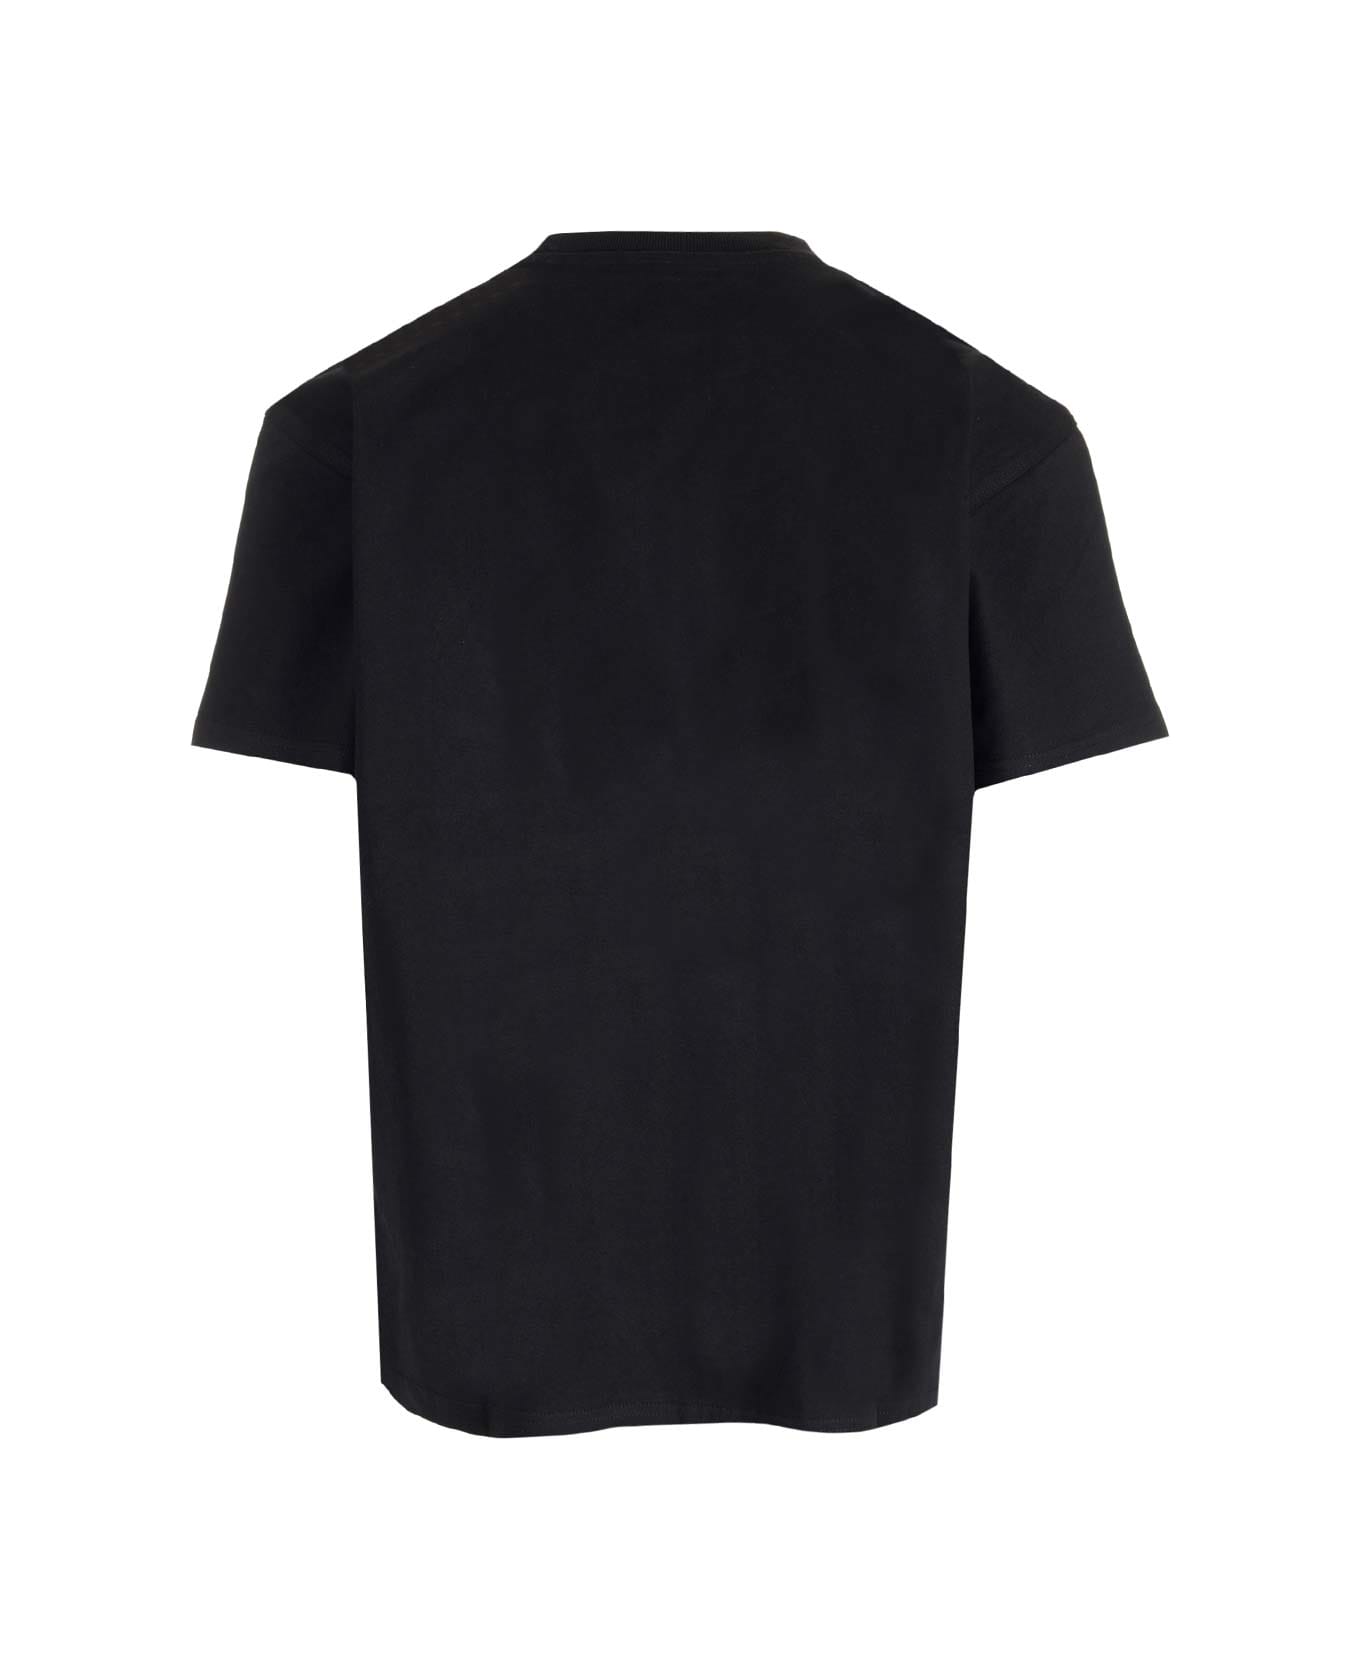 Carhartt T-shirt With Pocket - Black